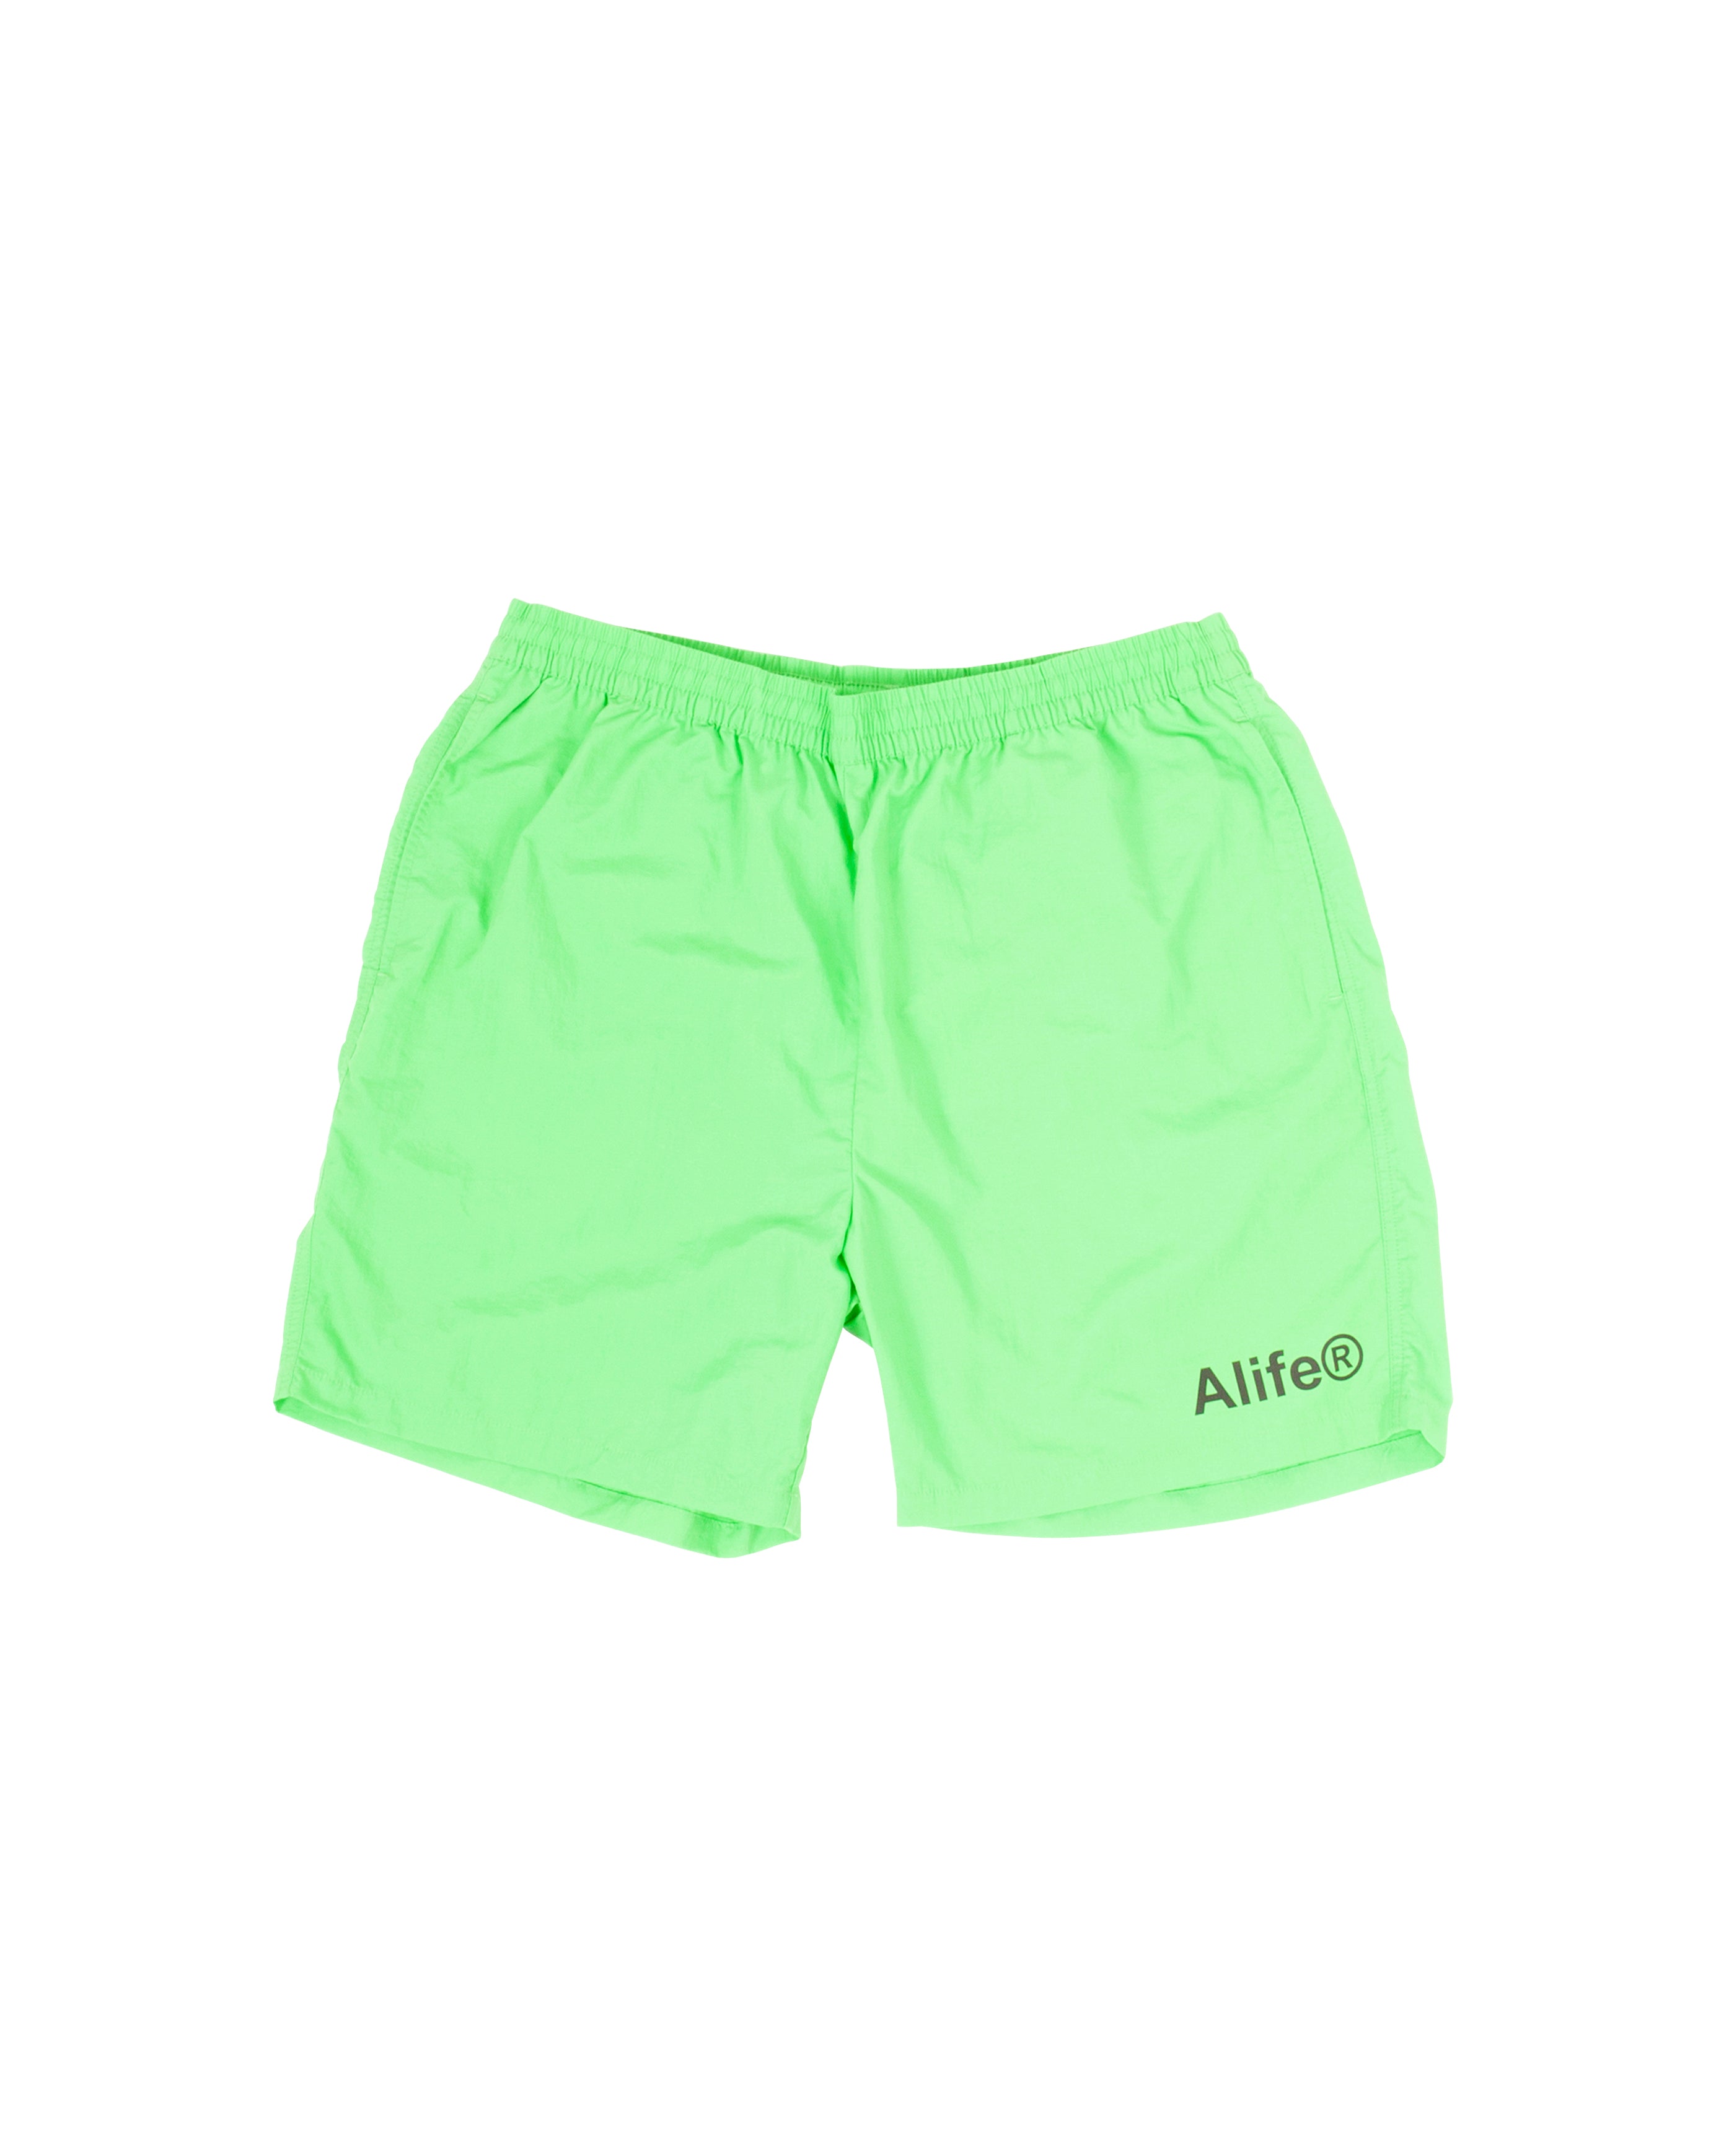 Alife Basic Nylon Shorts Green - ALISS20-38 - Starcow Paris – Starcowparis